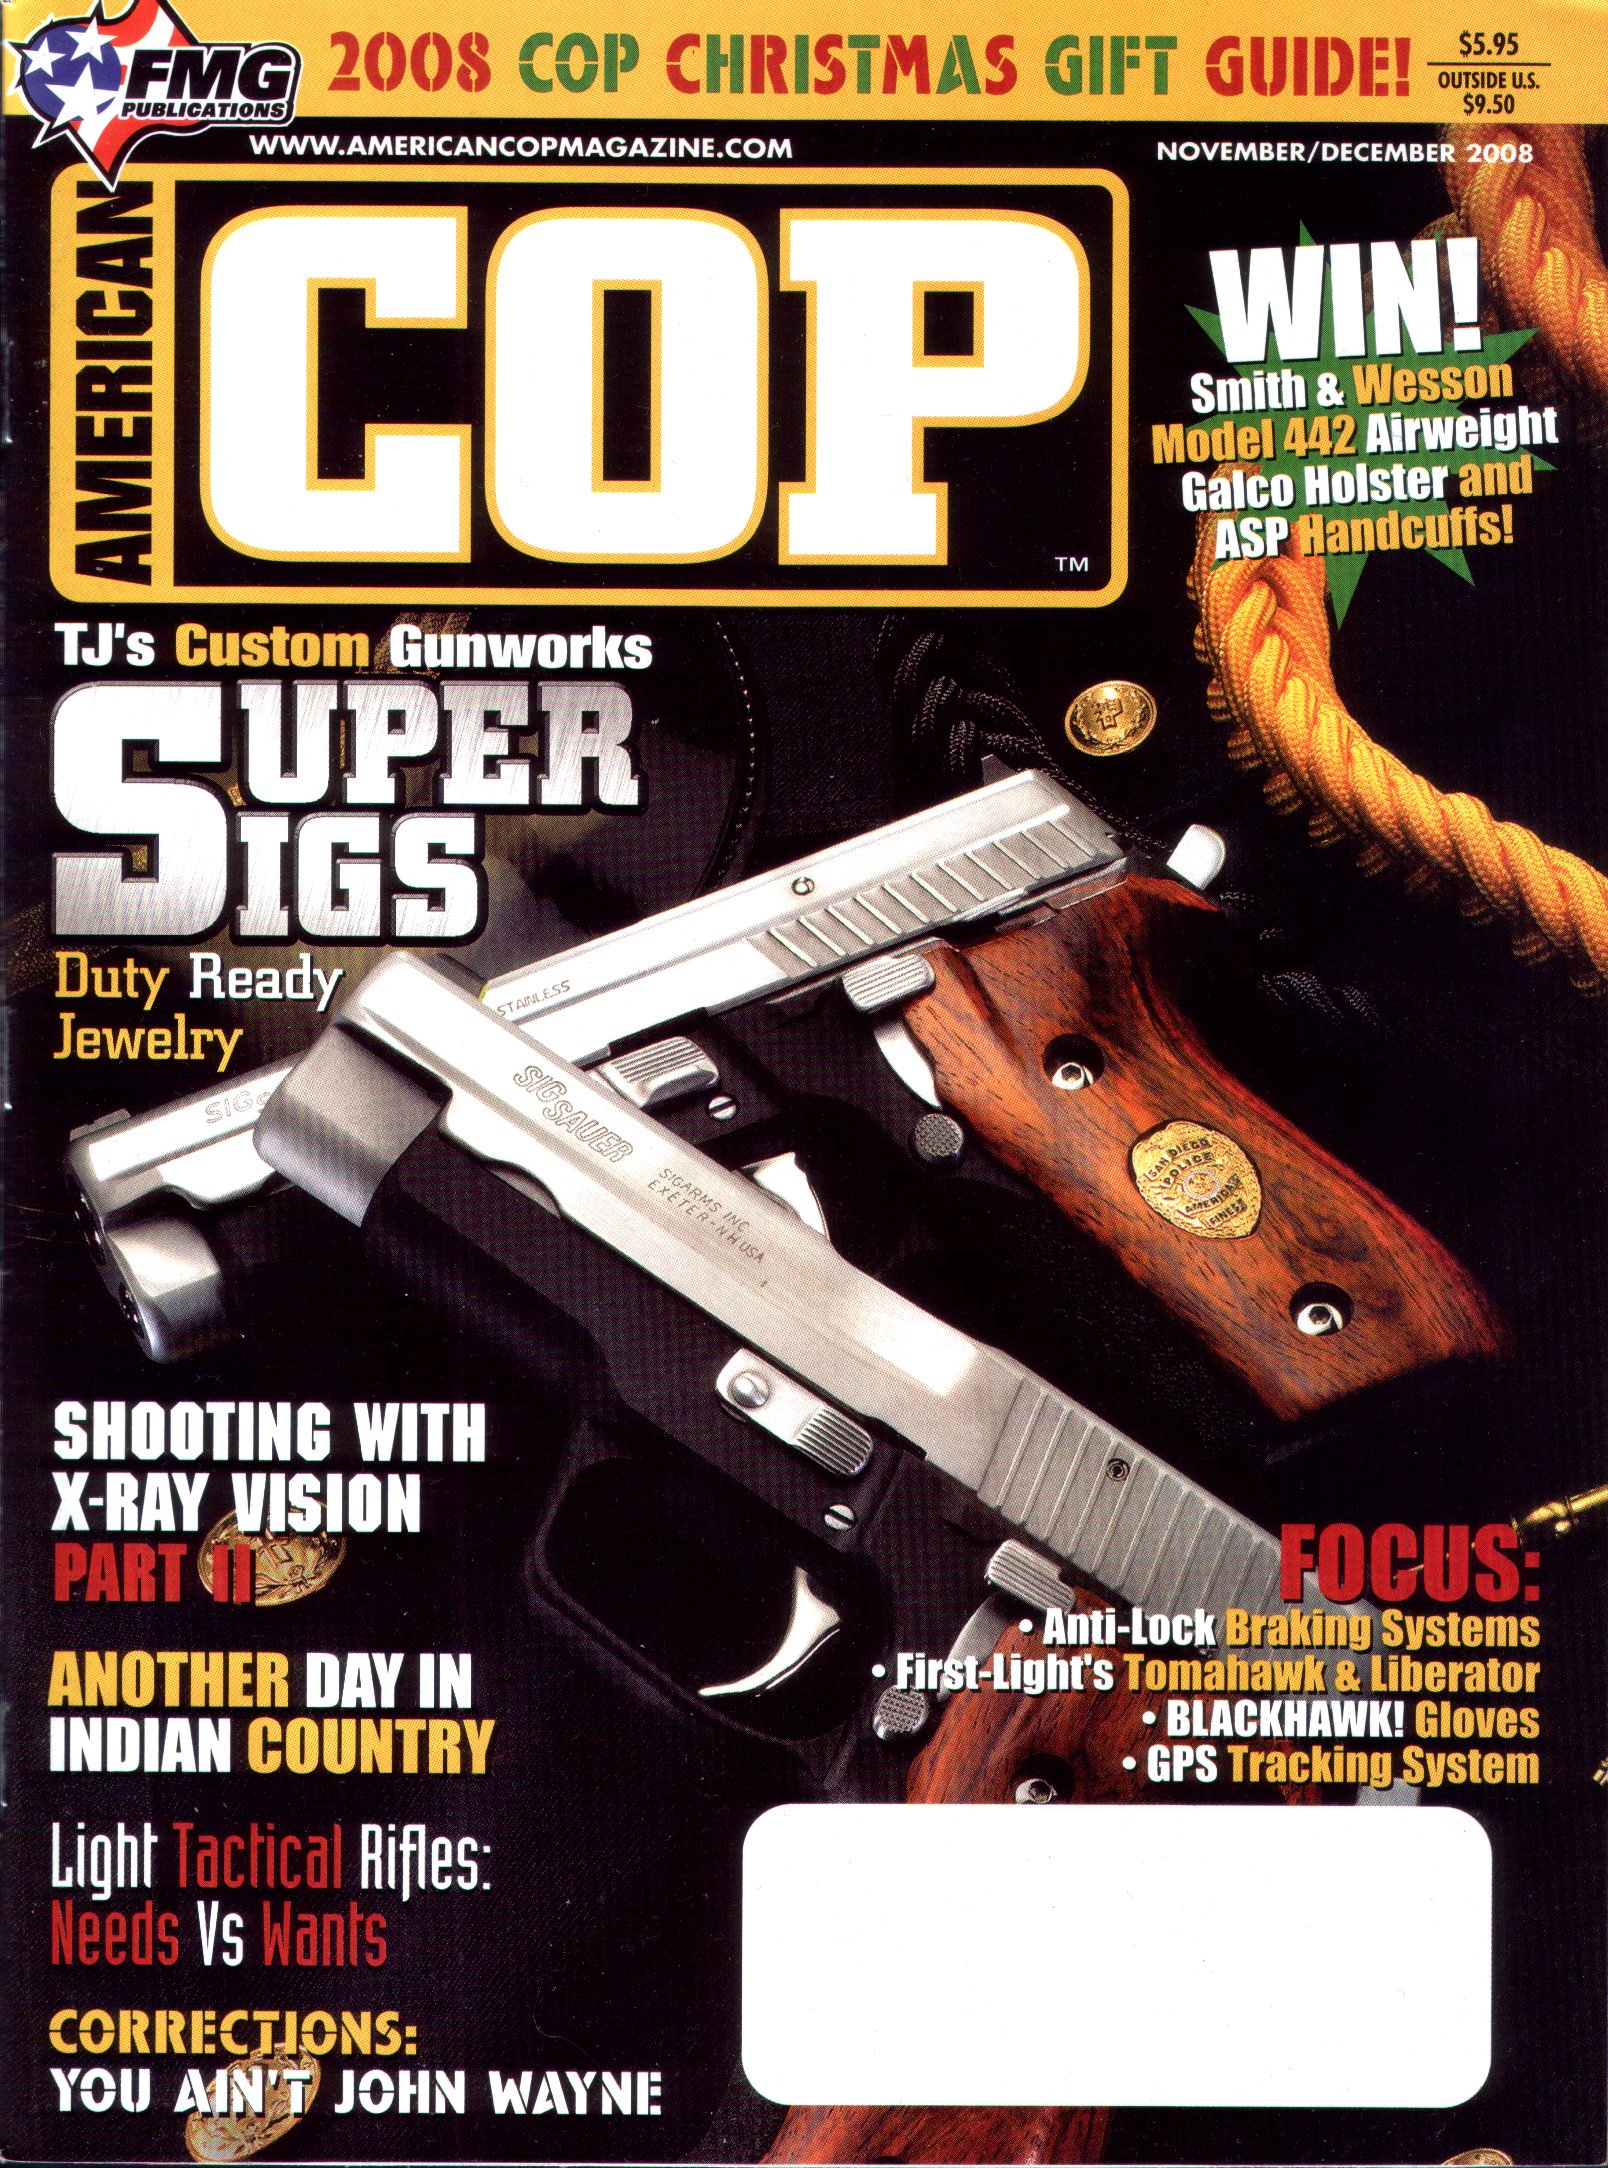 TJ's Super Sigs Featured in COP Magazine 2008 Cover